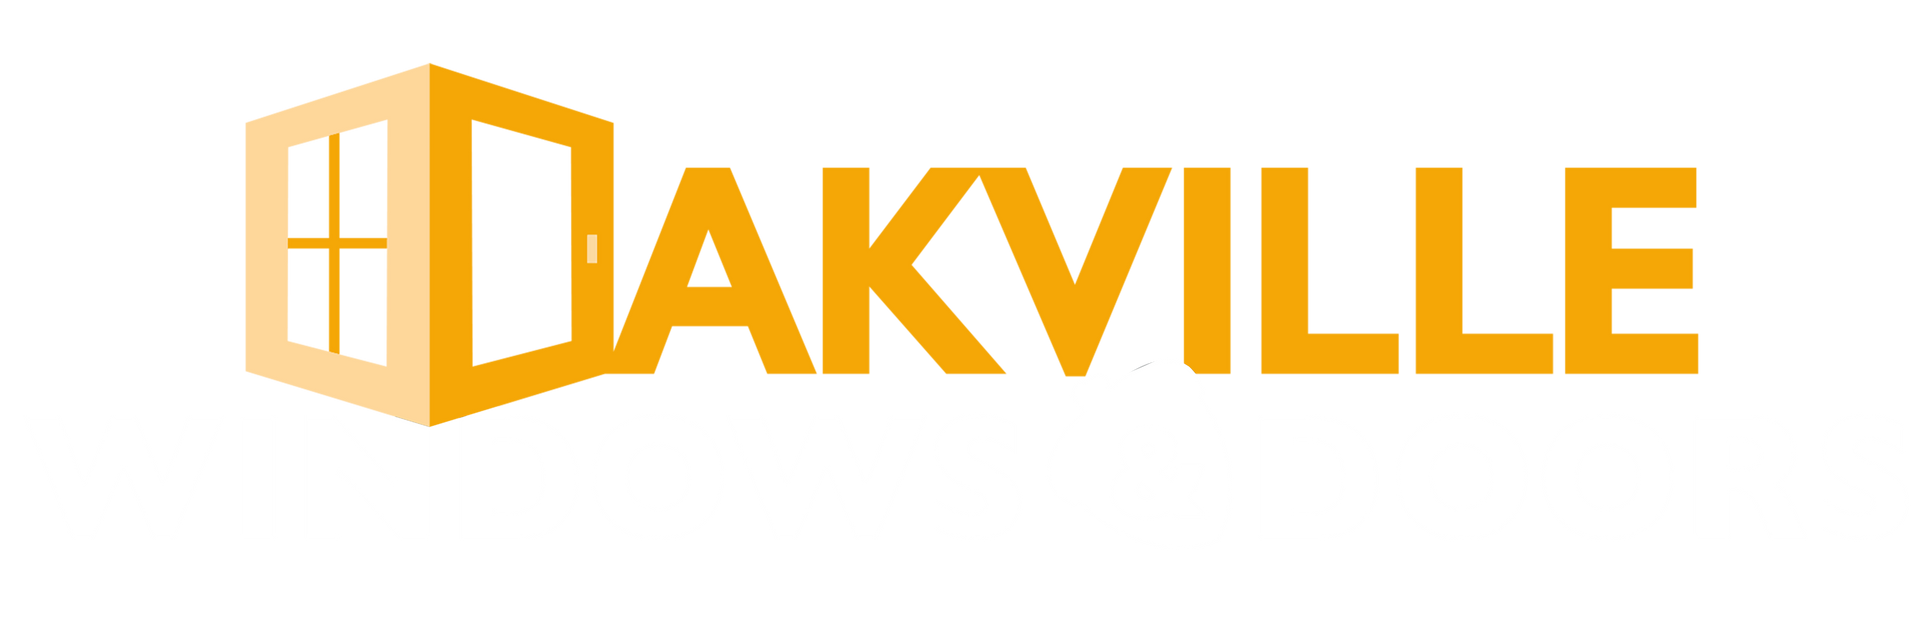 Oakville Windows & Doors Business Logo